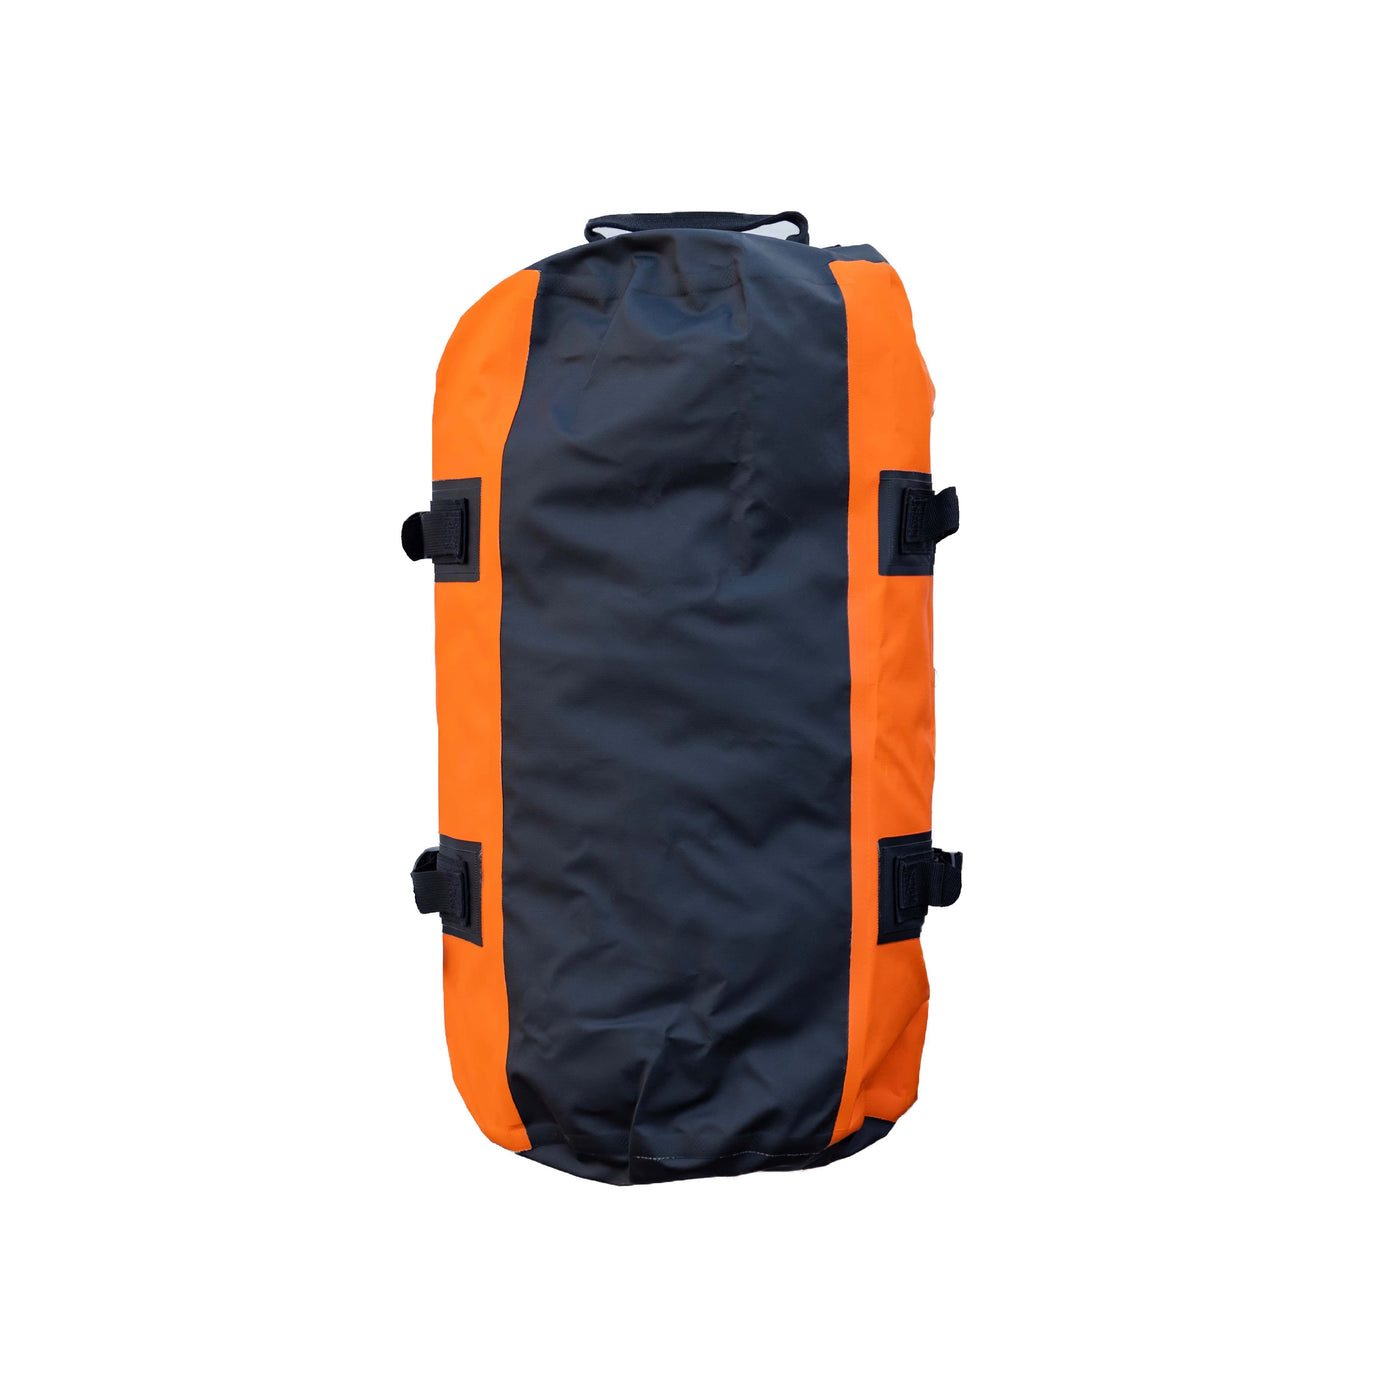 Paddle Co. Waterproof Duffle Bag